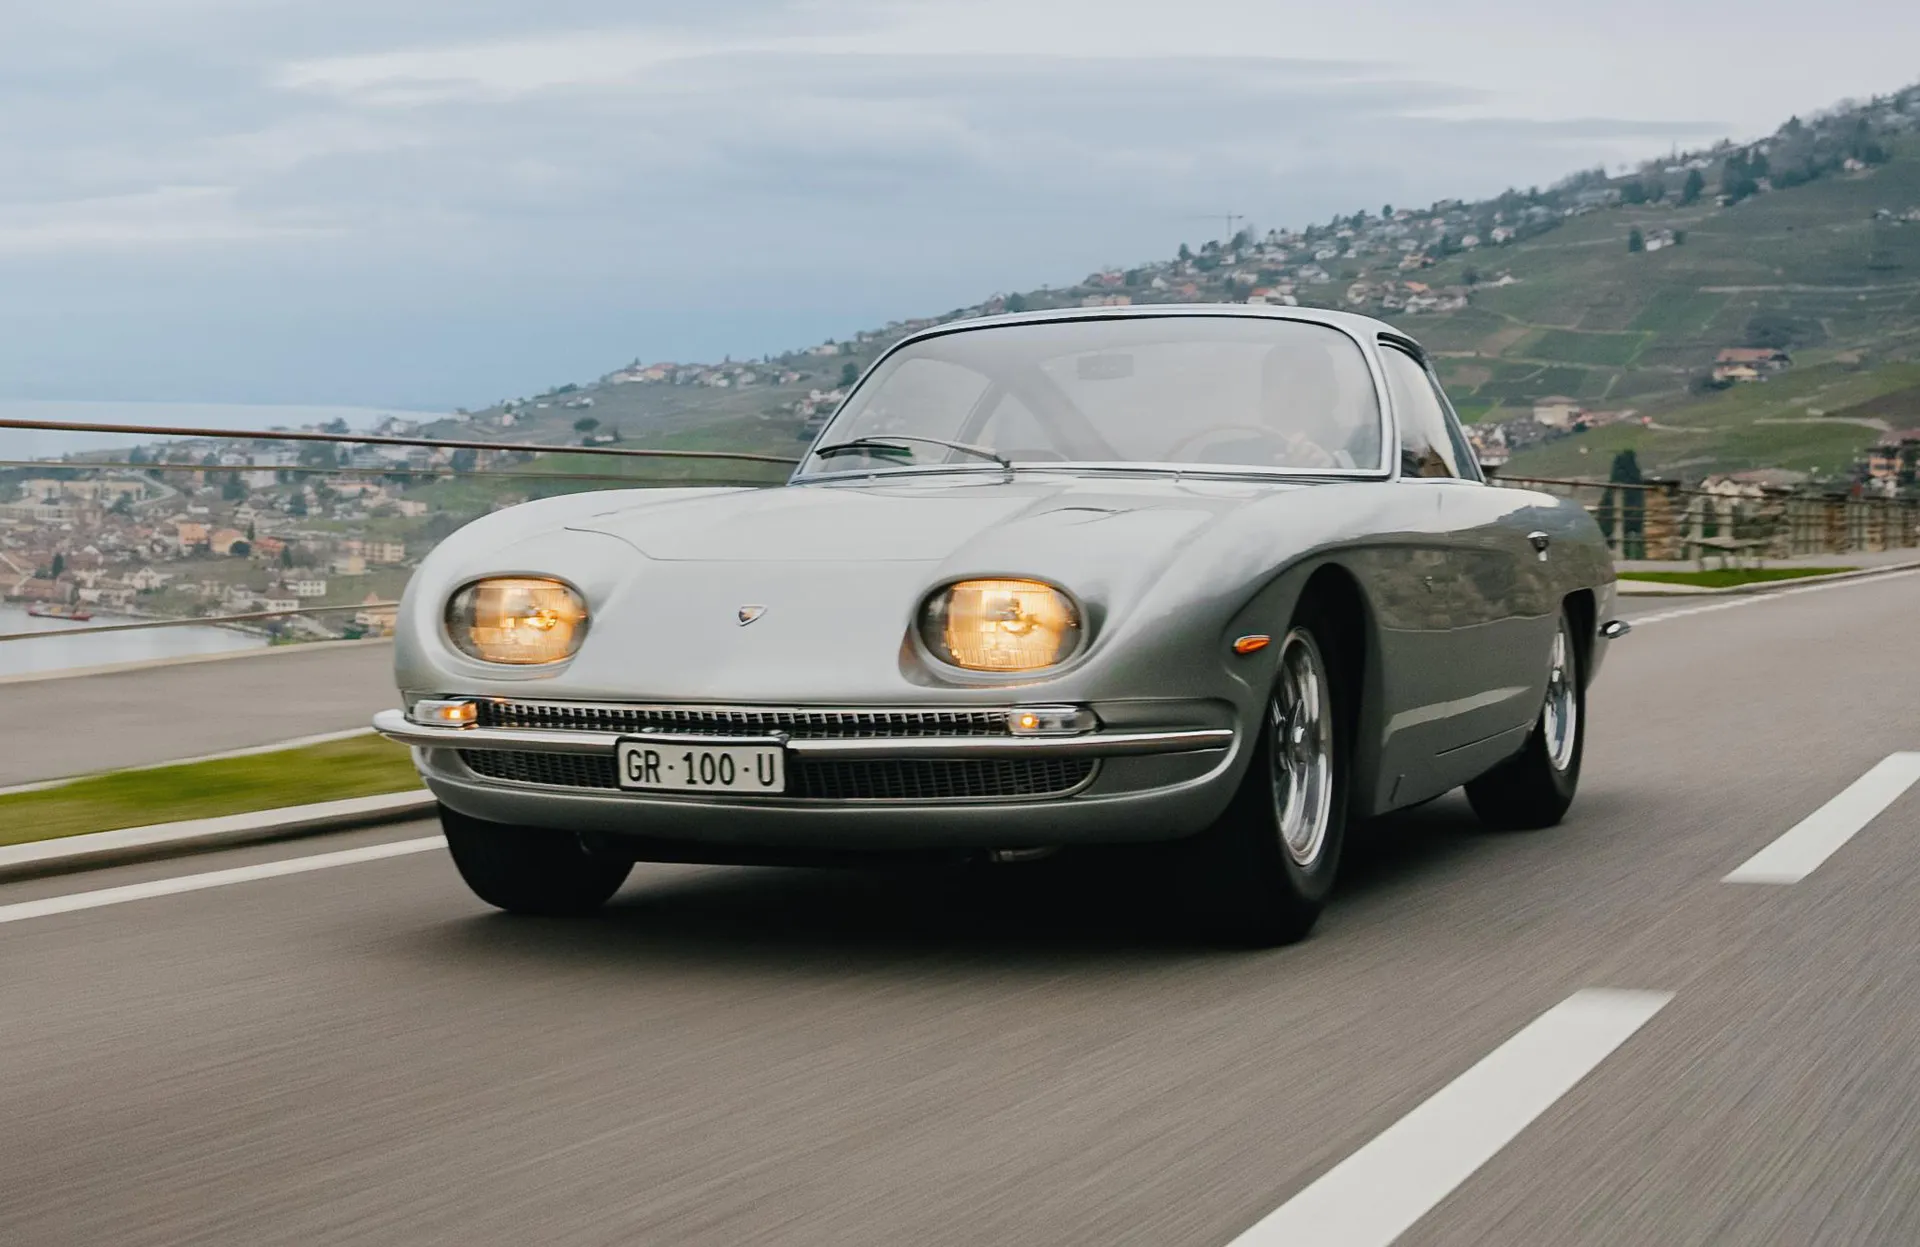 Lamborghini's first car, the 350 GT, turns 60